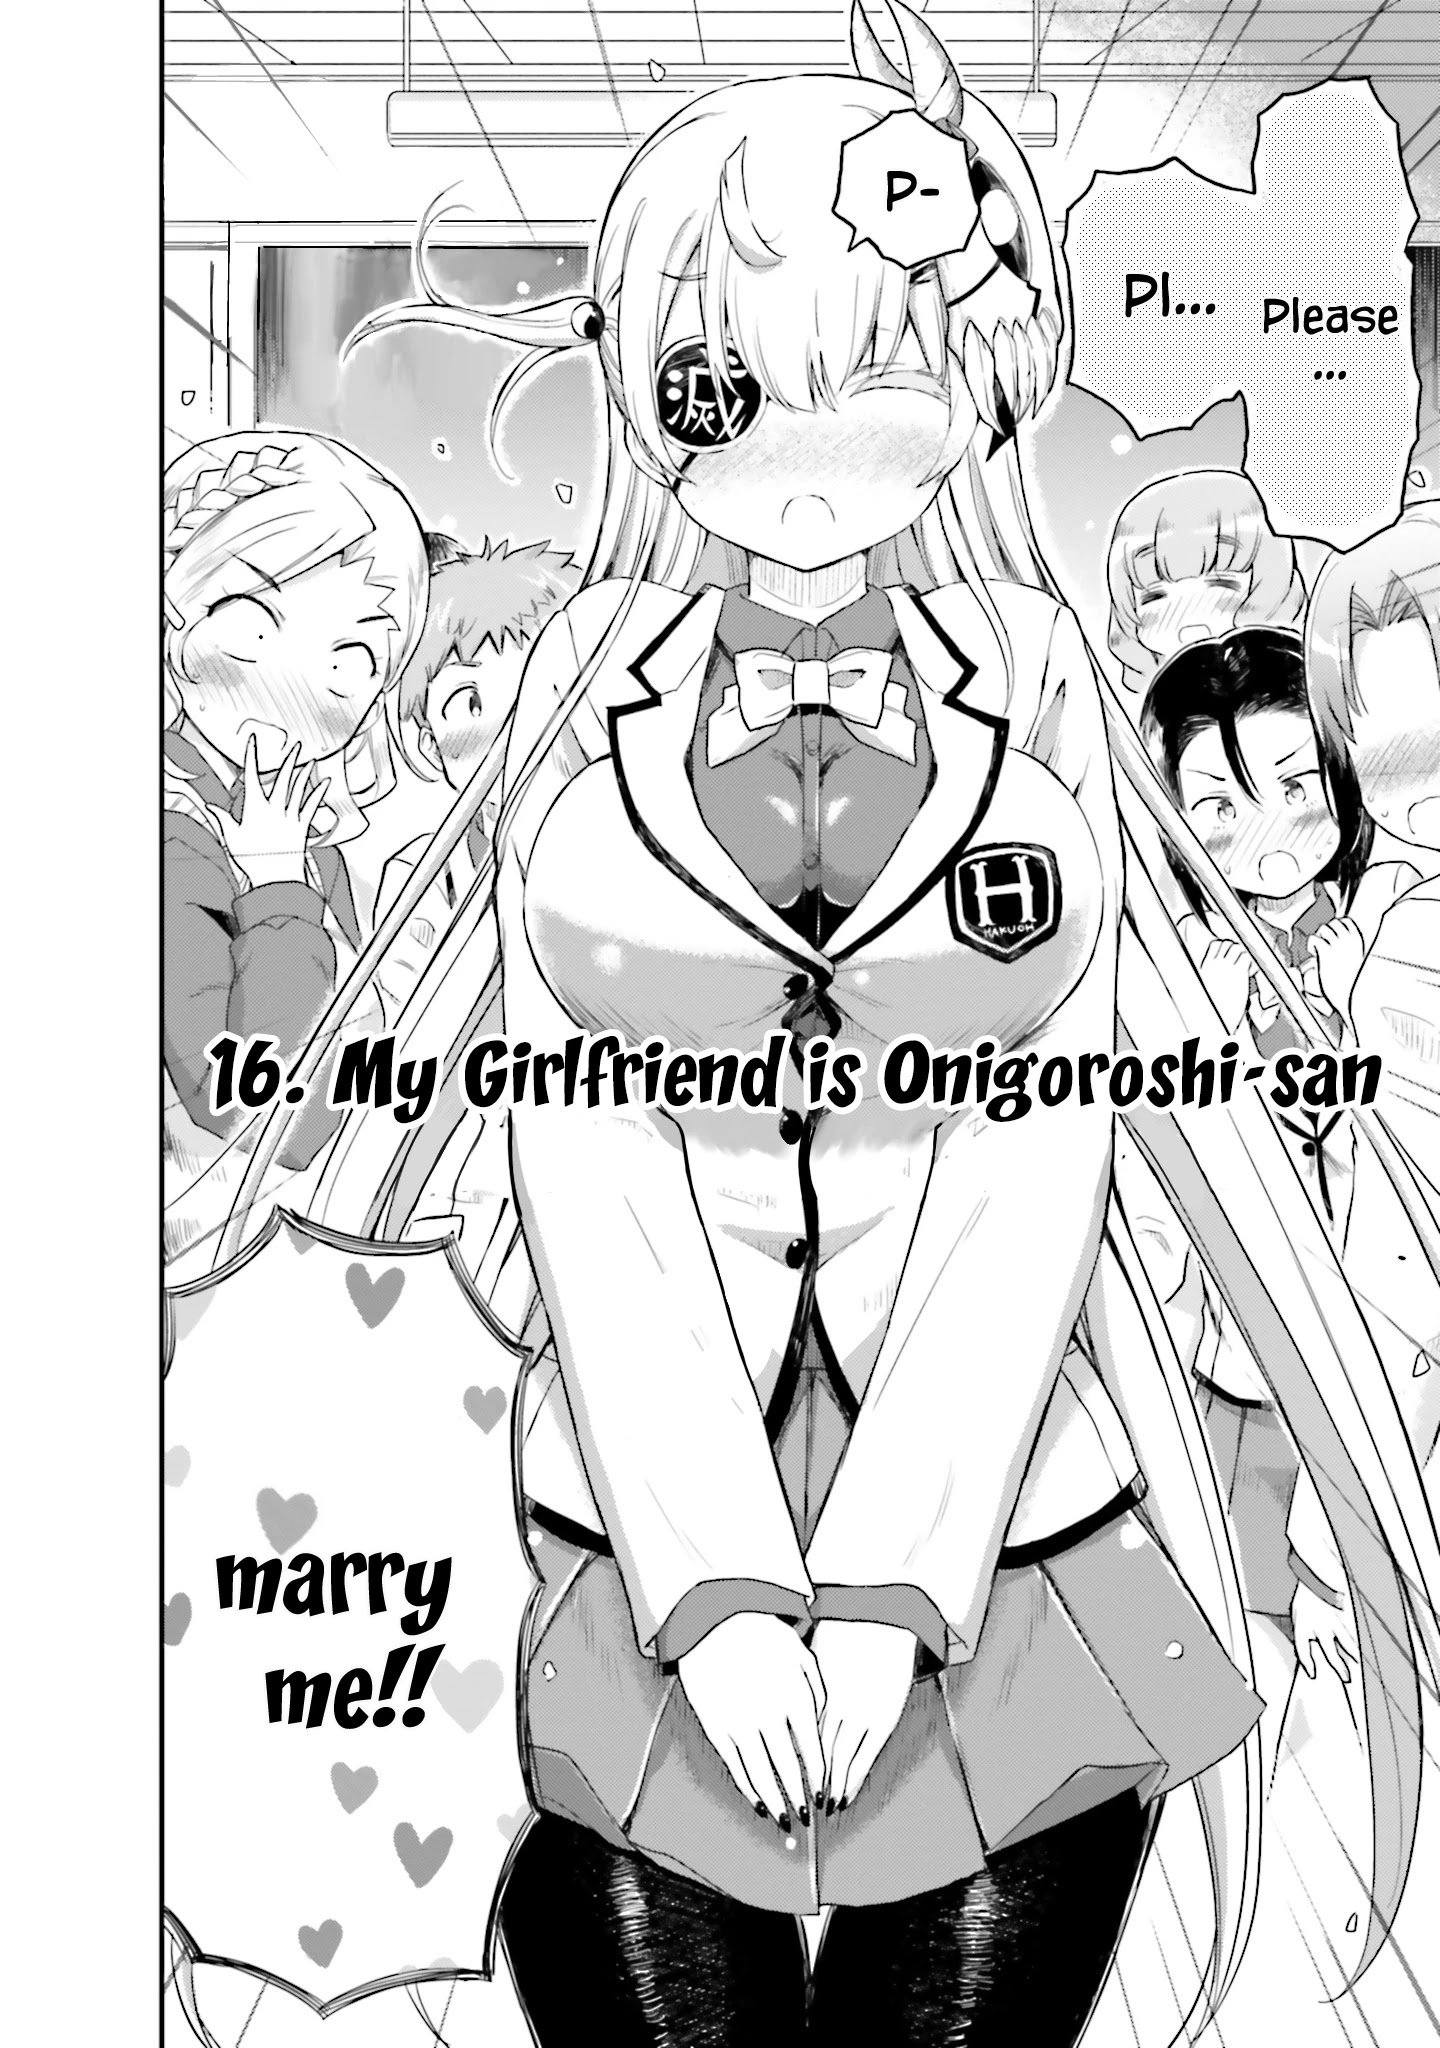 Choroidesuyo Onigoroshi-San! Chapter 16: My Girlfriend Is Onigoroshi-San - Picture 3